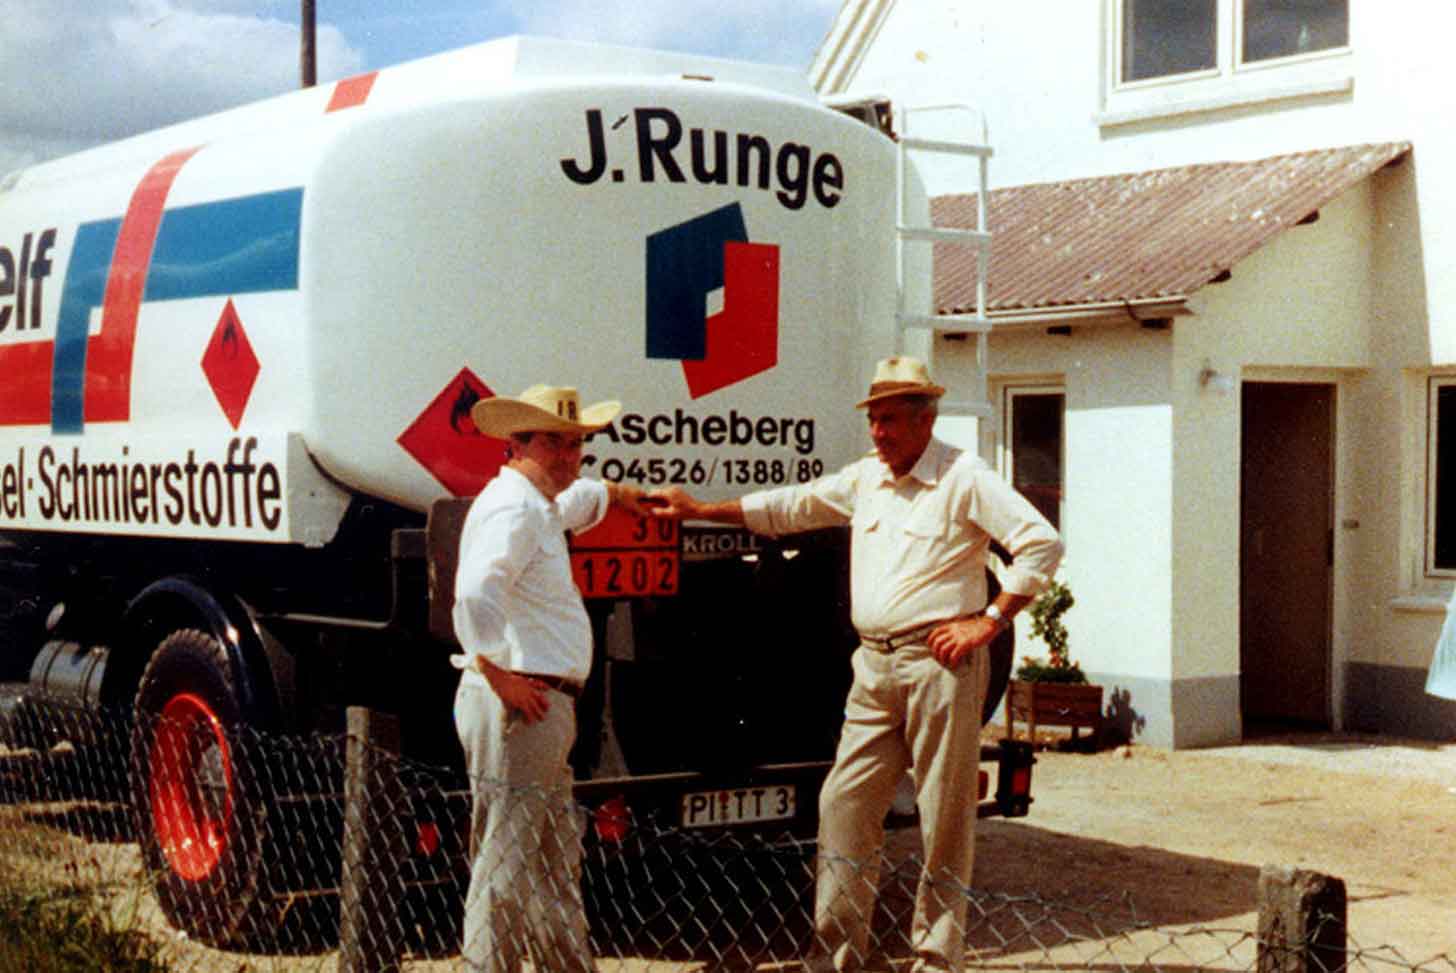  J. Runge GmbH